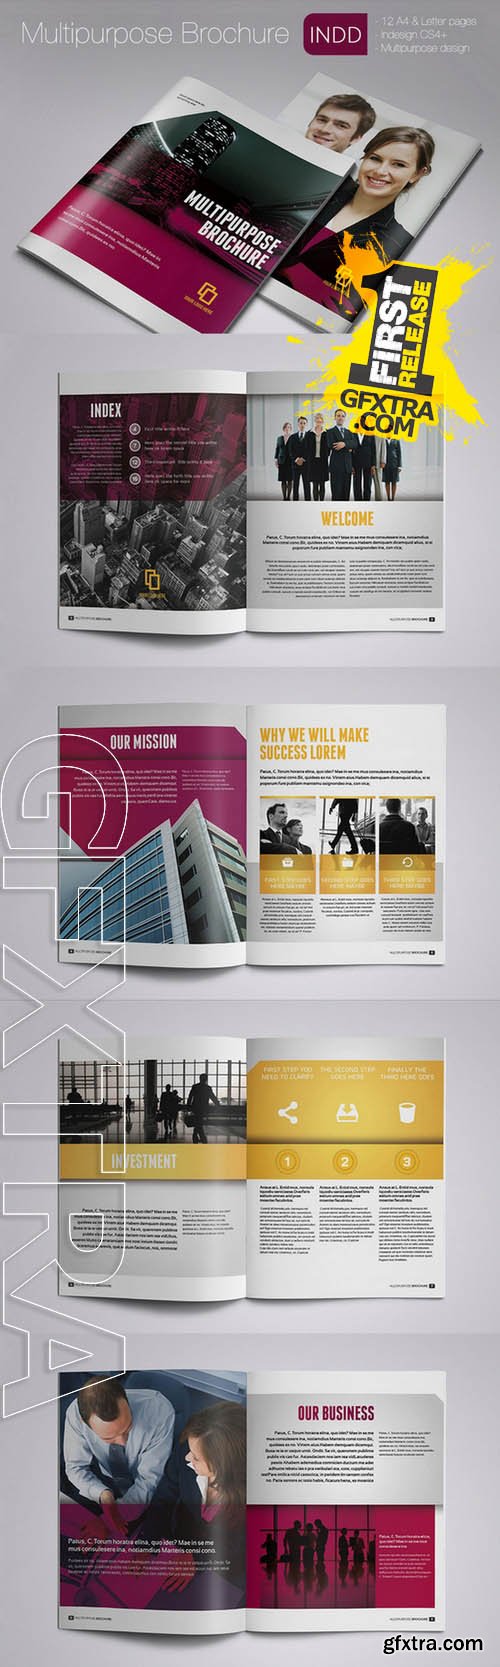 Multipurpose Brochure - Creativemarket 105717